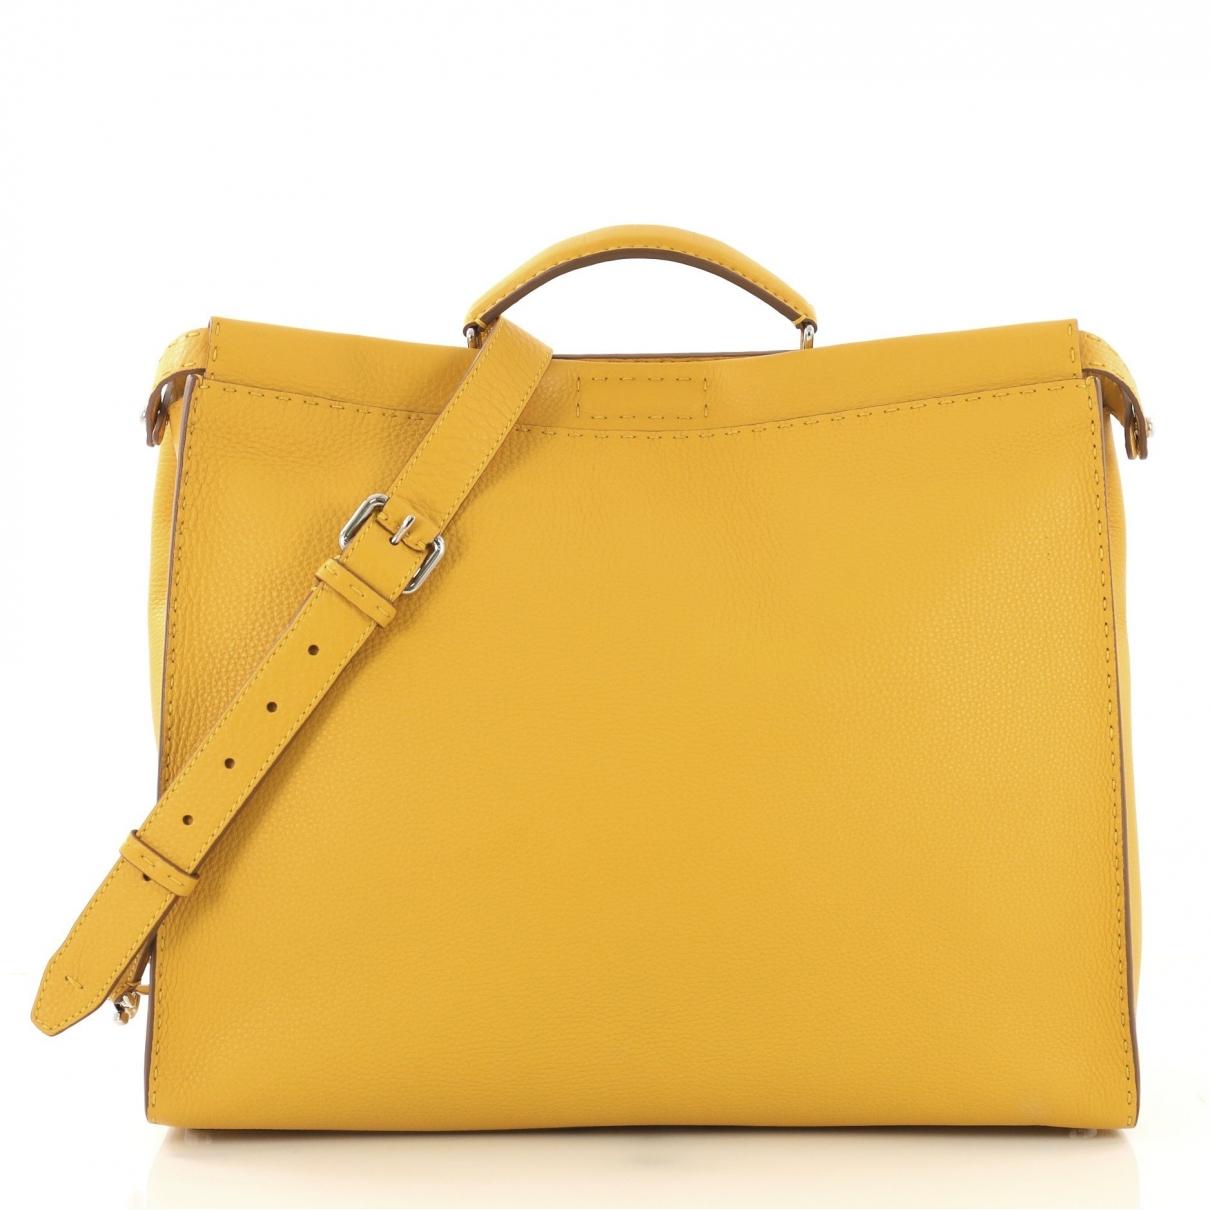 Fendi Pre-owned Peekaboo Yellow Leather Handbags in Yellow - Lyst